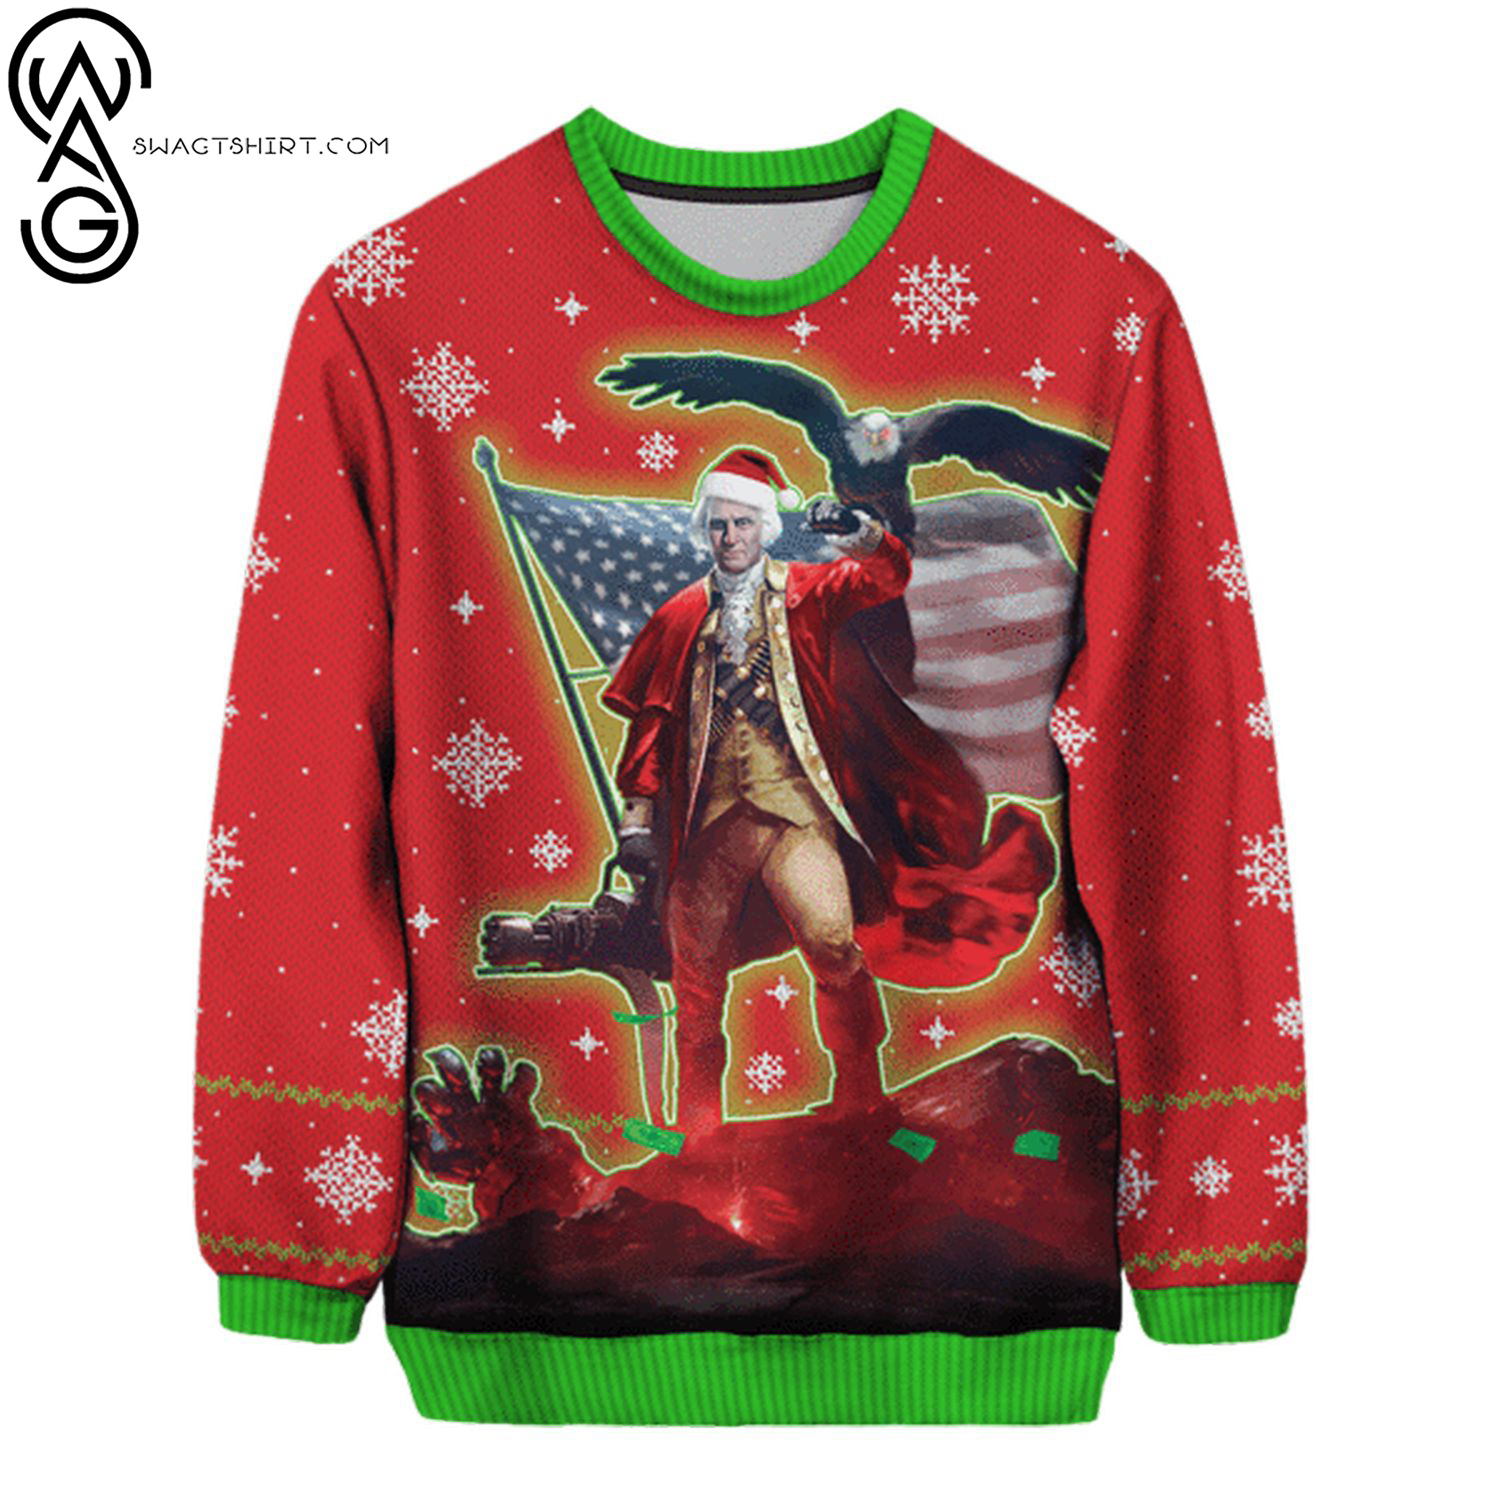 George washington full printing ugly christmas sweater